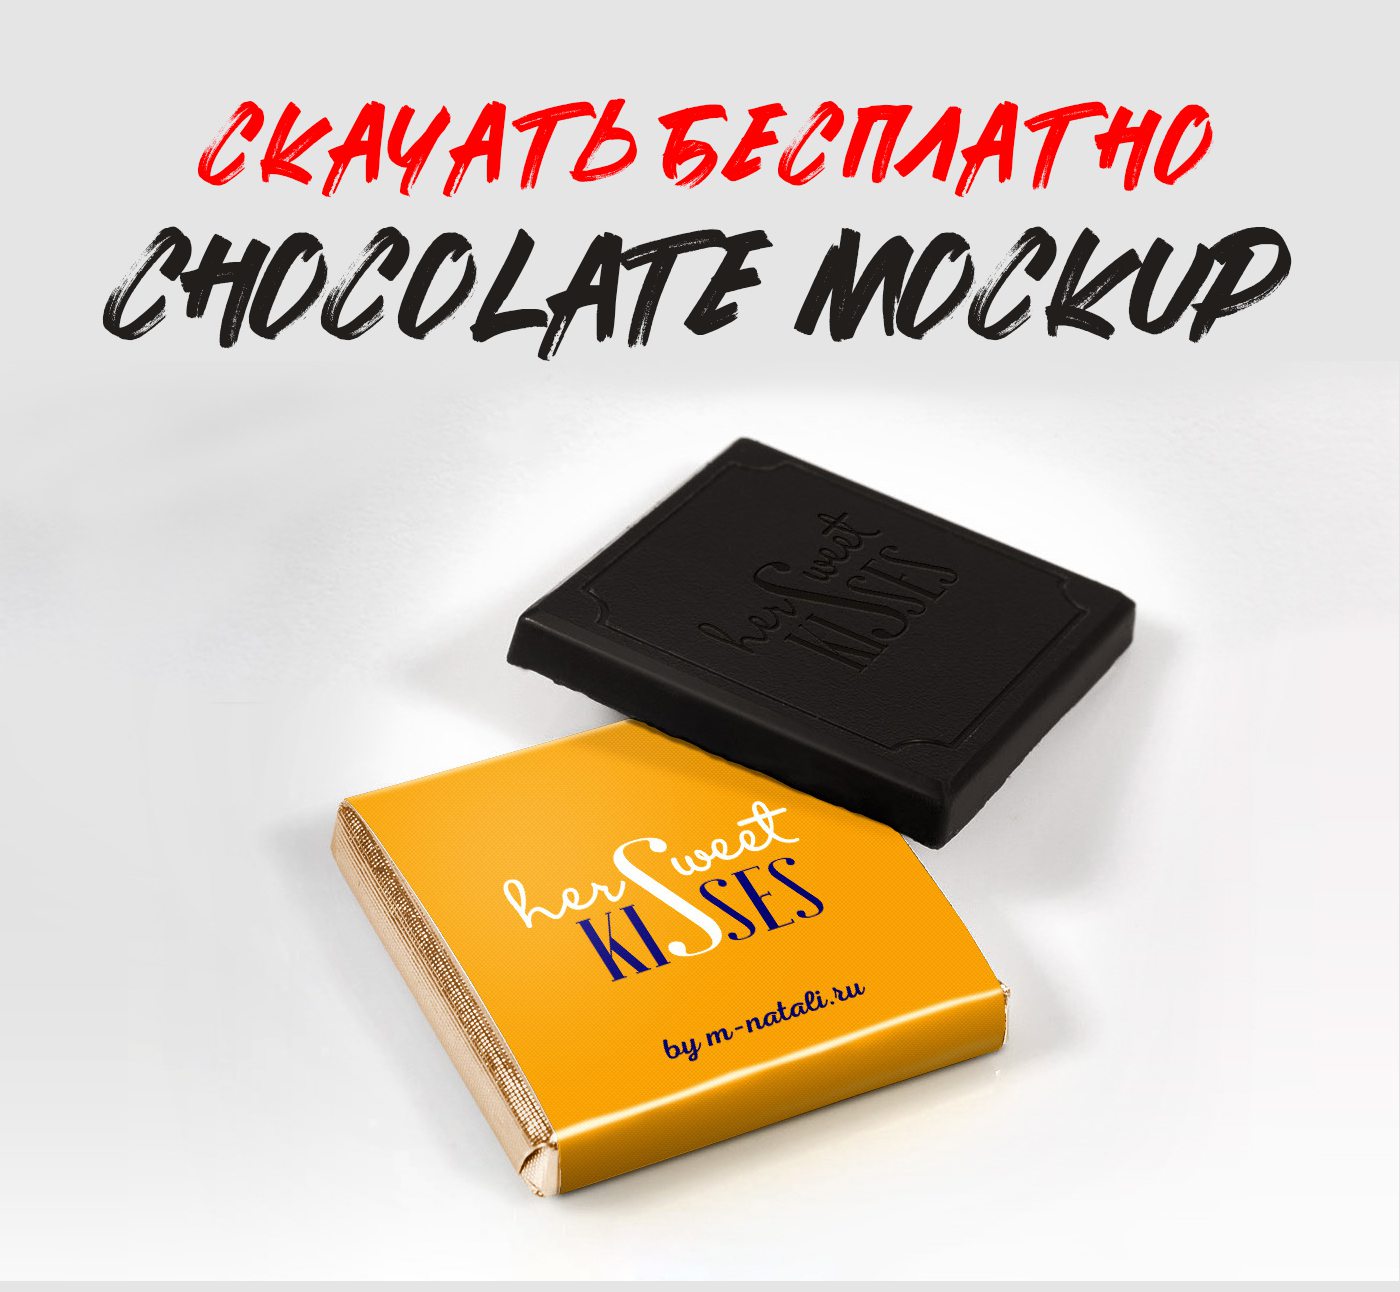 FREE Chocolate Mockup PSD